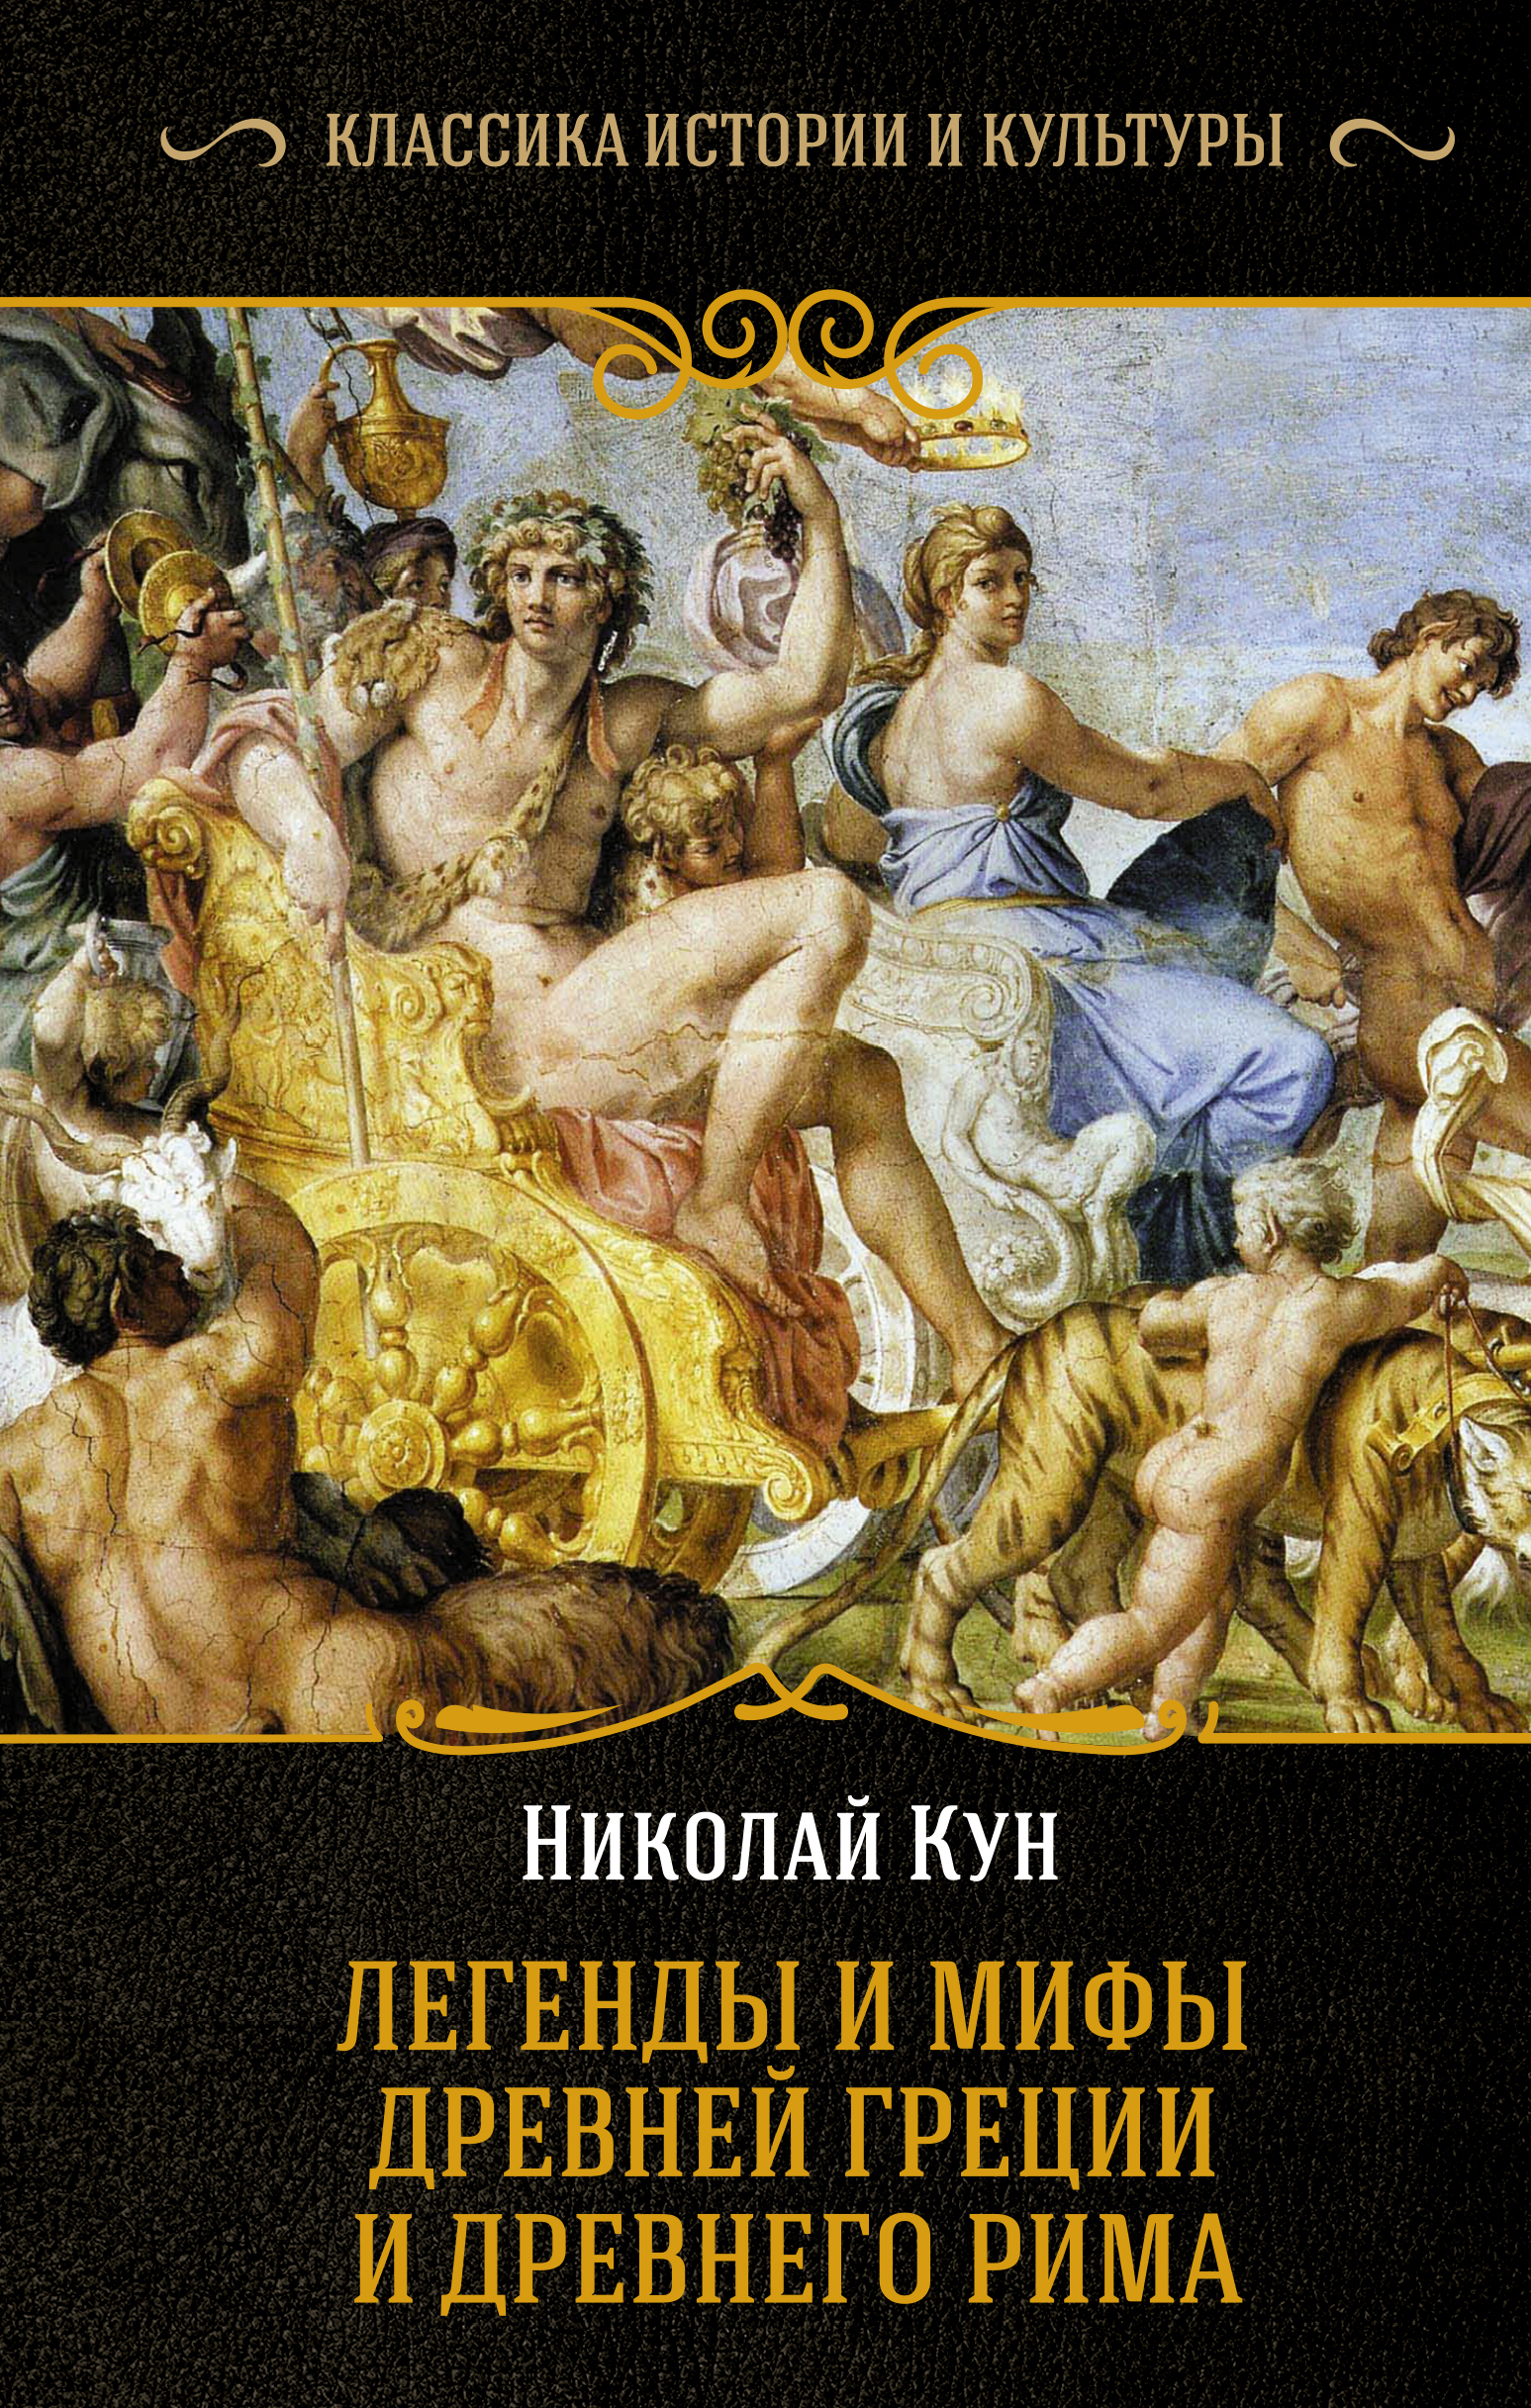 Книга легенды и мифы древней Греции н.а кун.